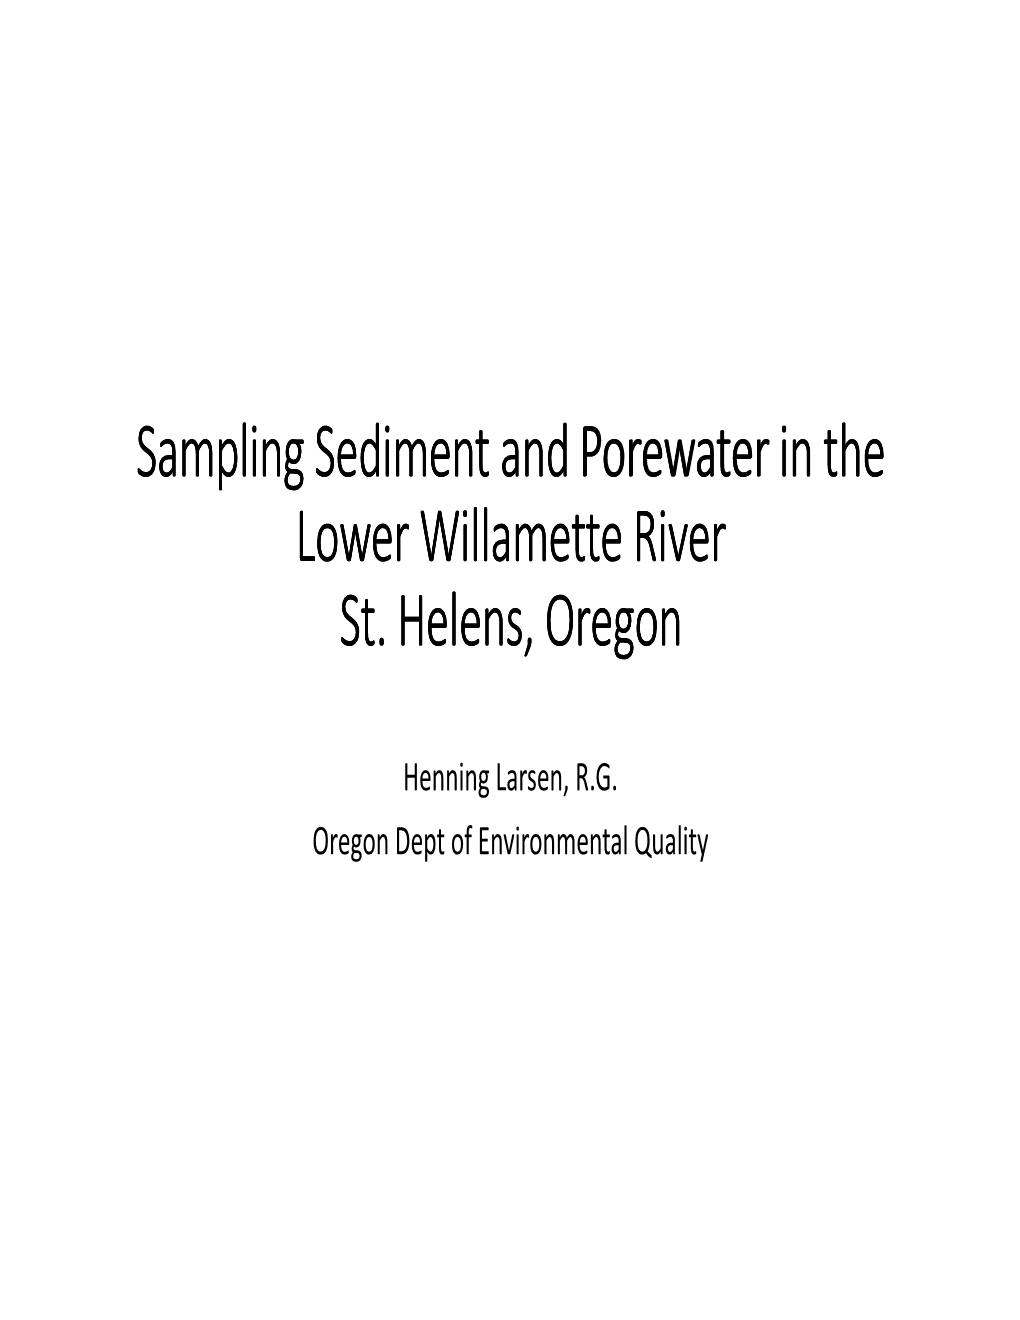 Henning Larsen, RG Oregon Dept of Environmental Quality